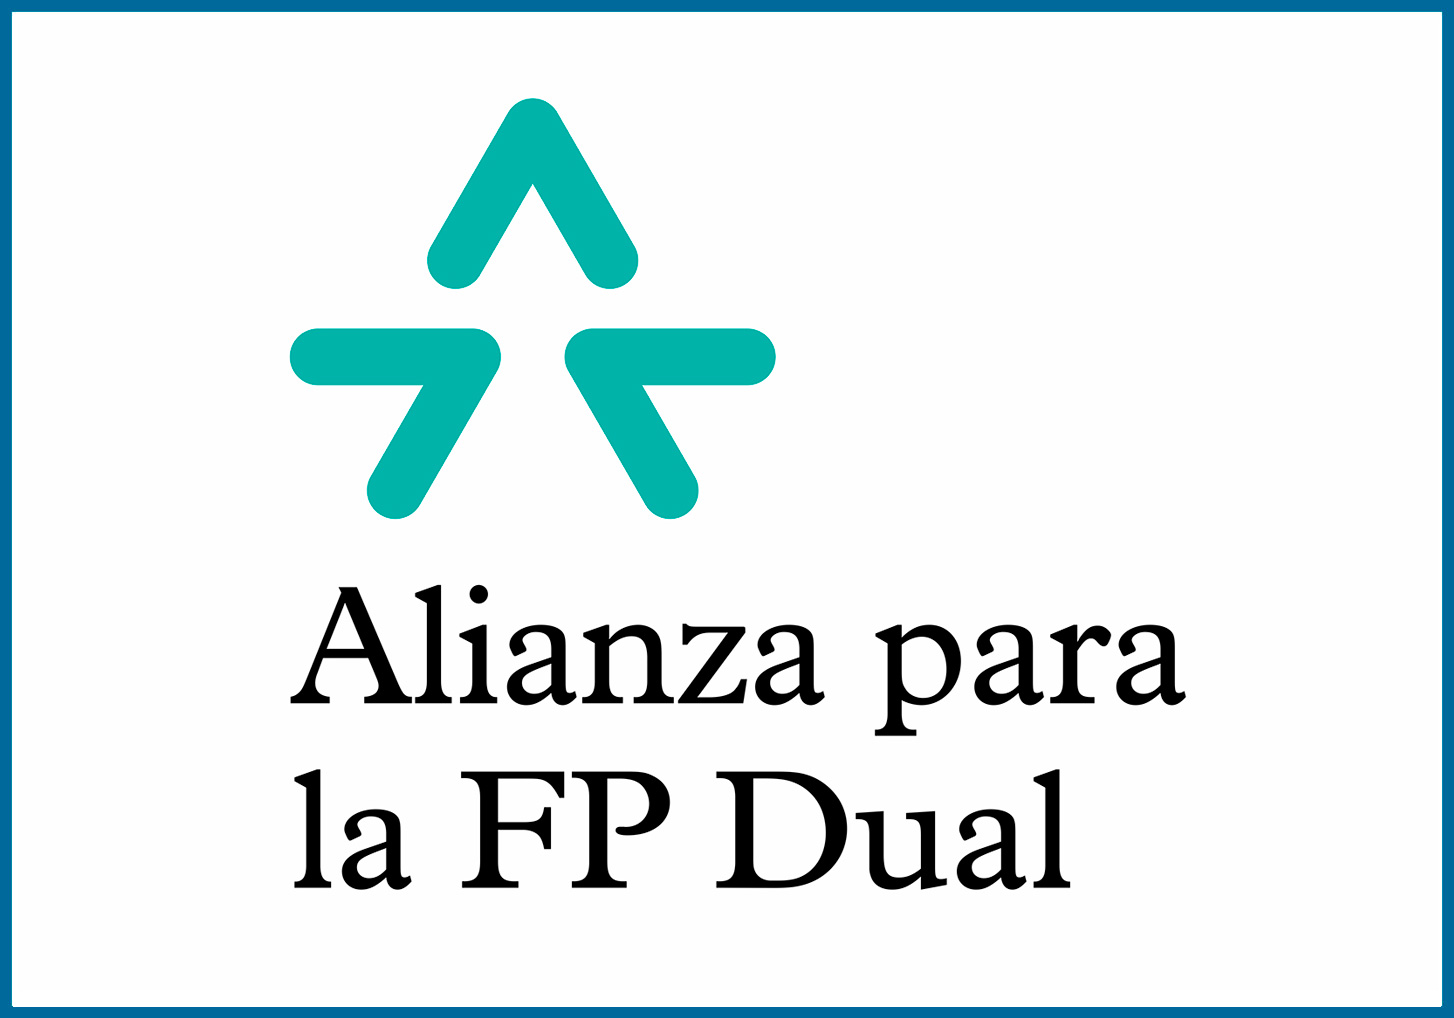 Logo FP DUAL